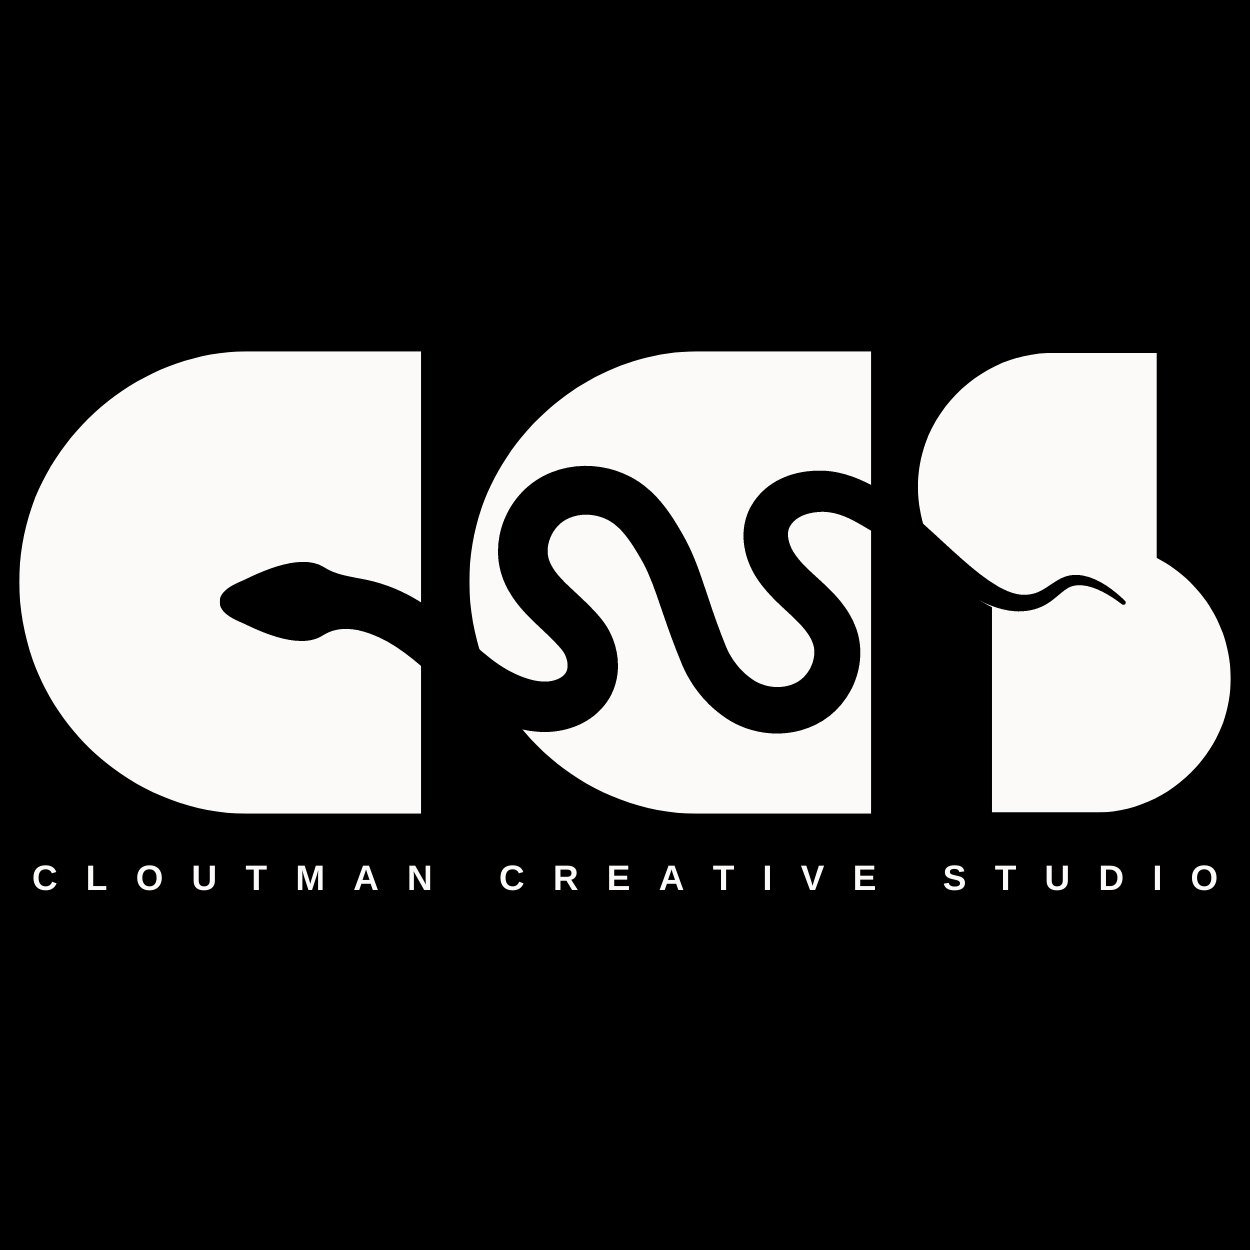 Cloutman Creative Studio